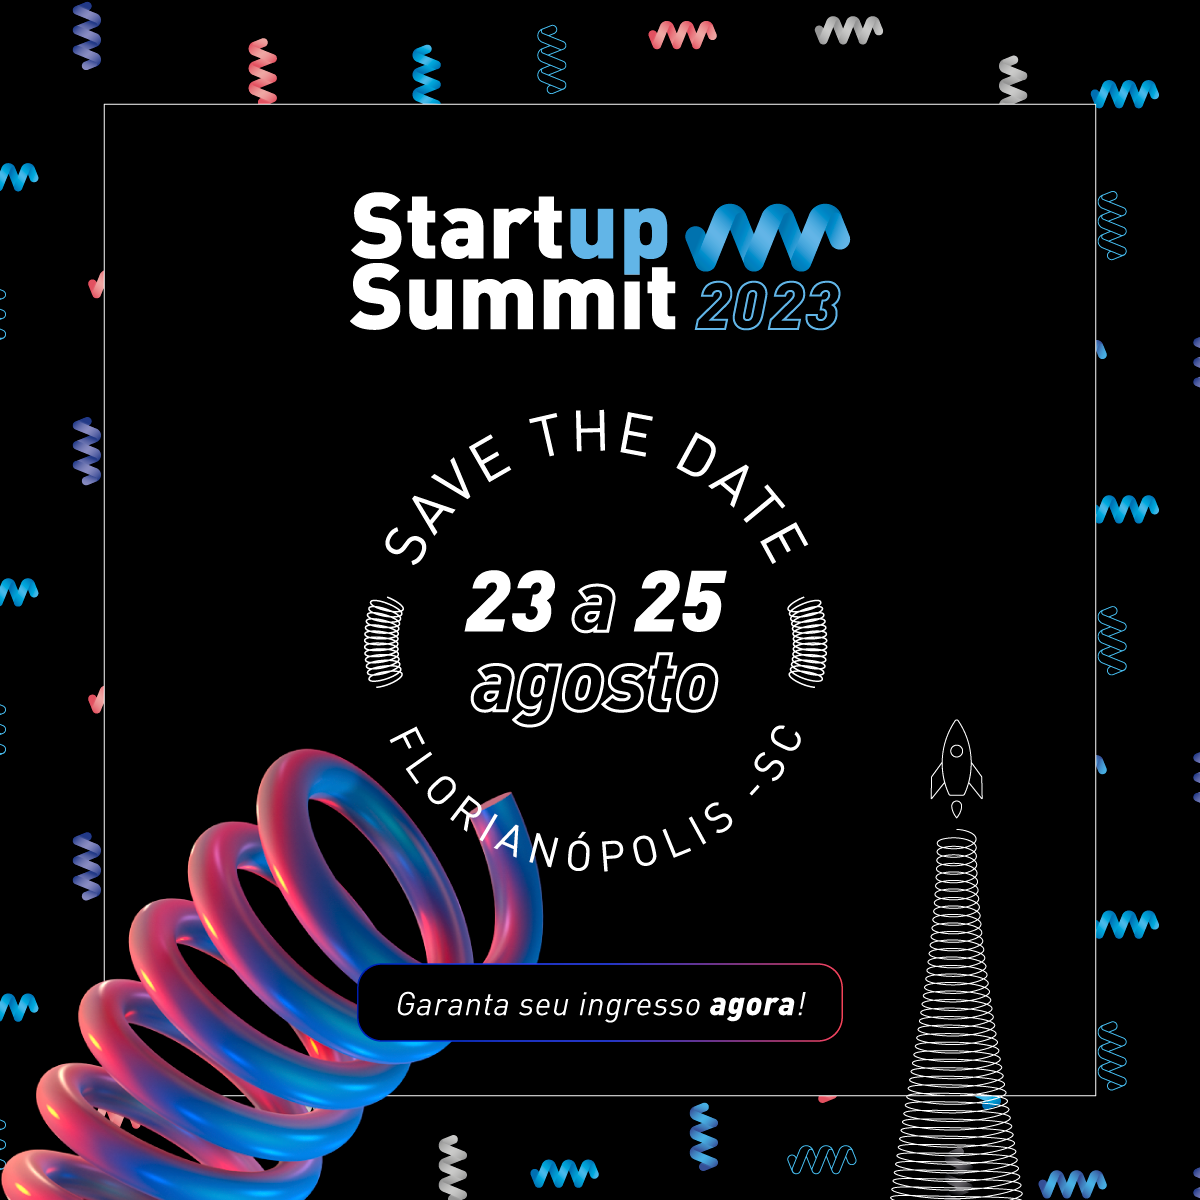 Startup Summit 2023 conectará startups, fundos e corporates em sua